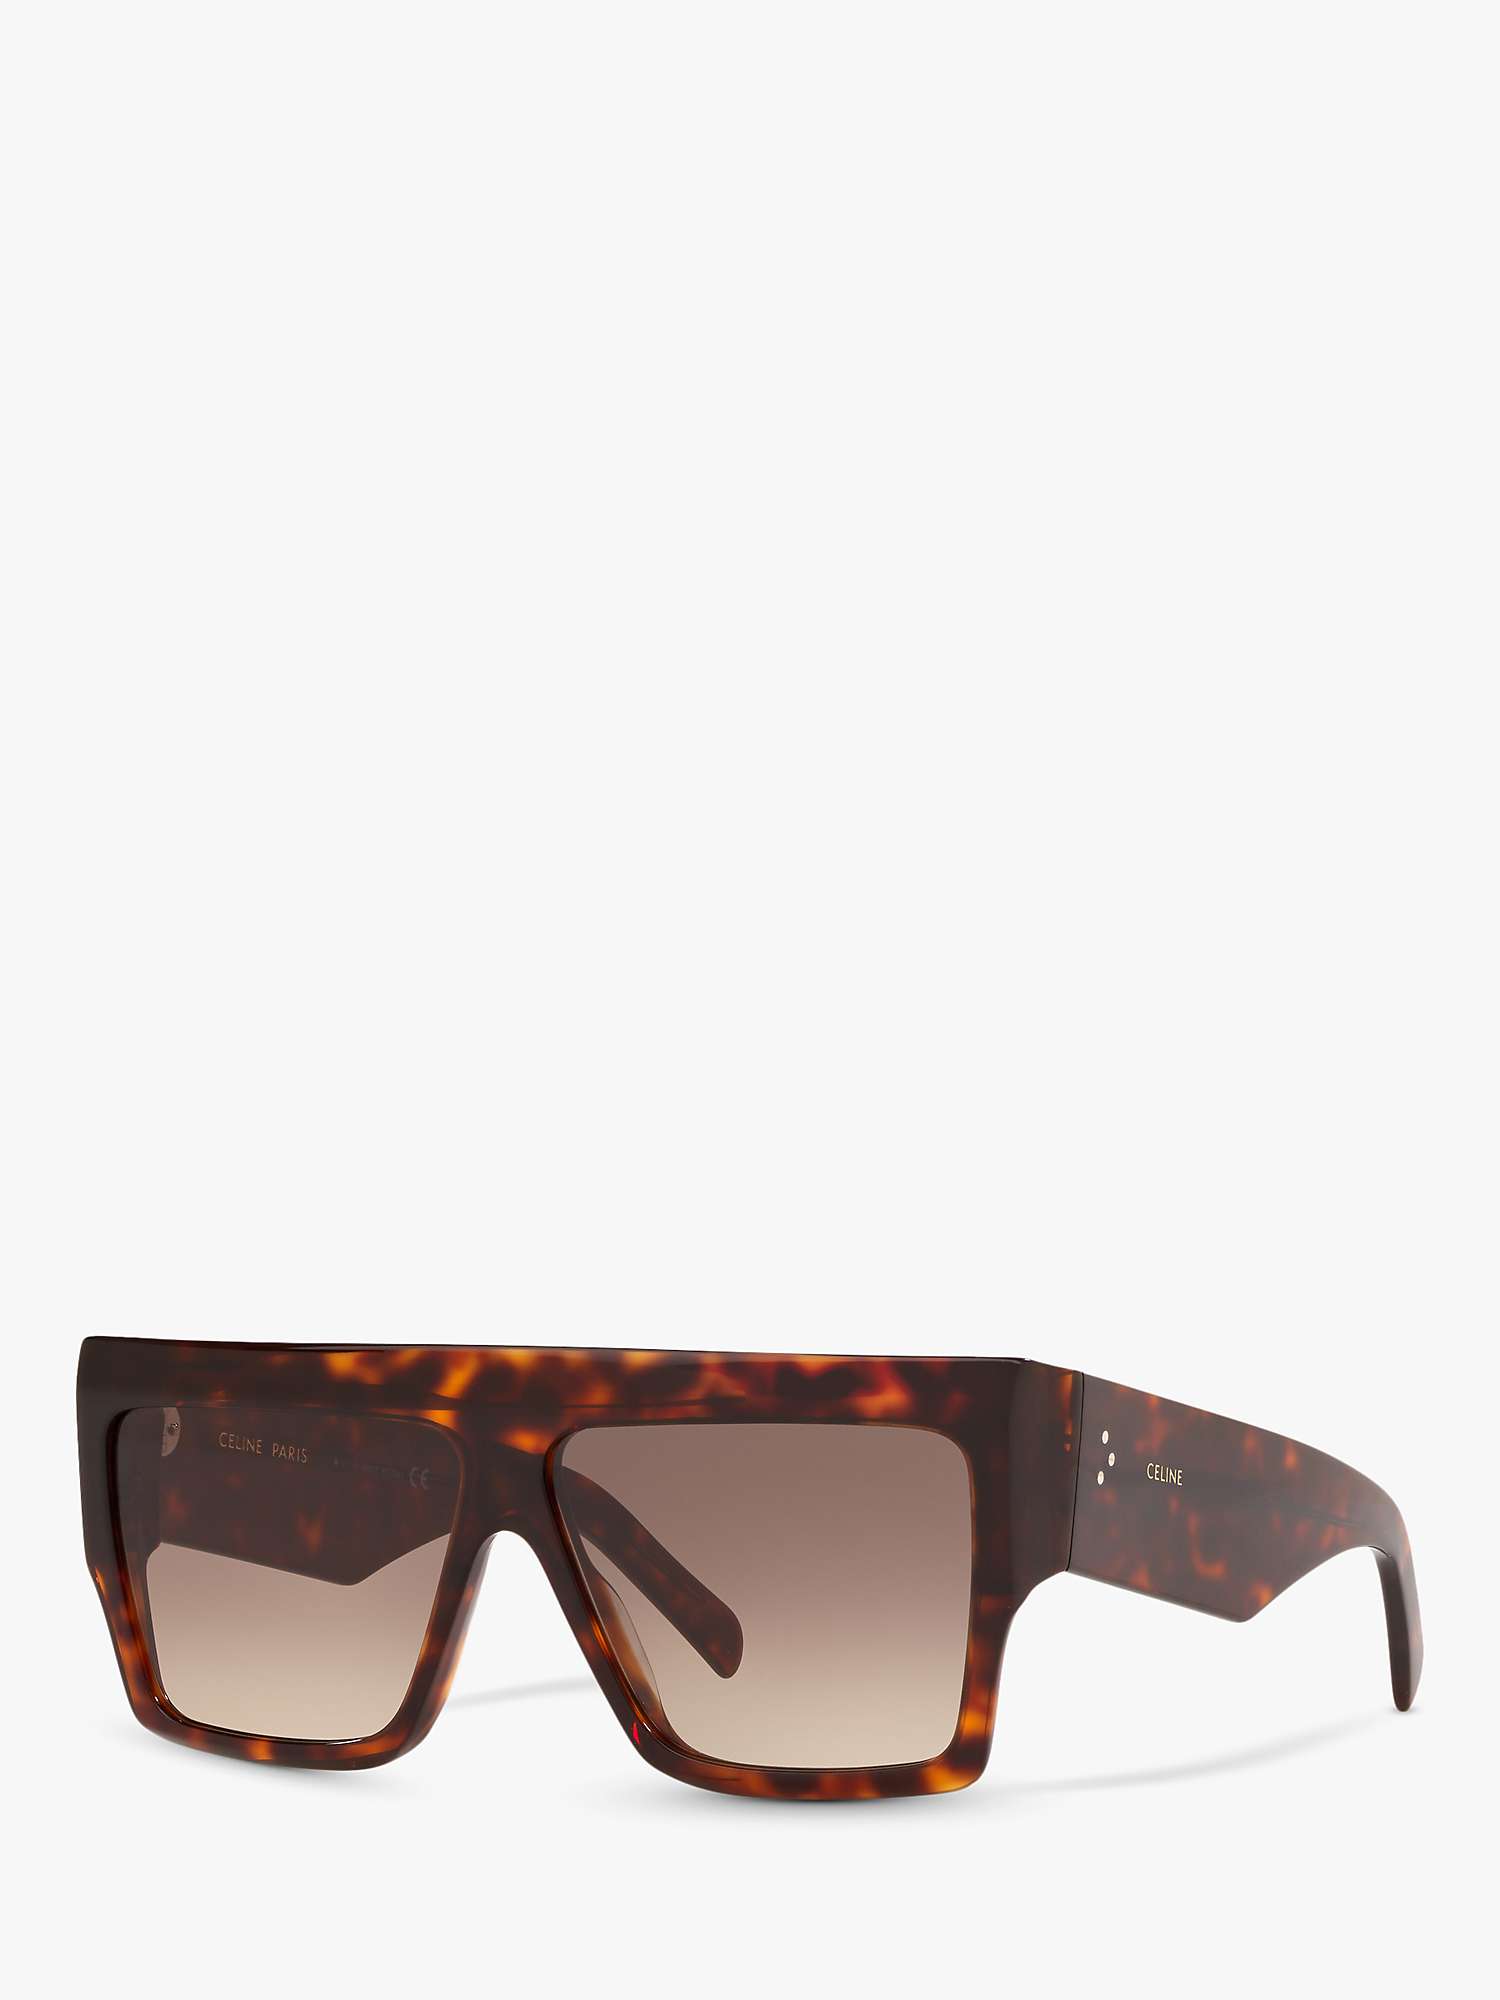 Buy Celine CL000240 Women's Square Sunglasses, Tortoise/Brown Gradient Online at johnlewis.com